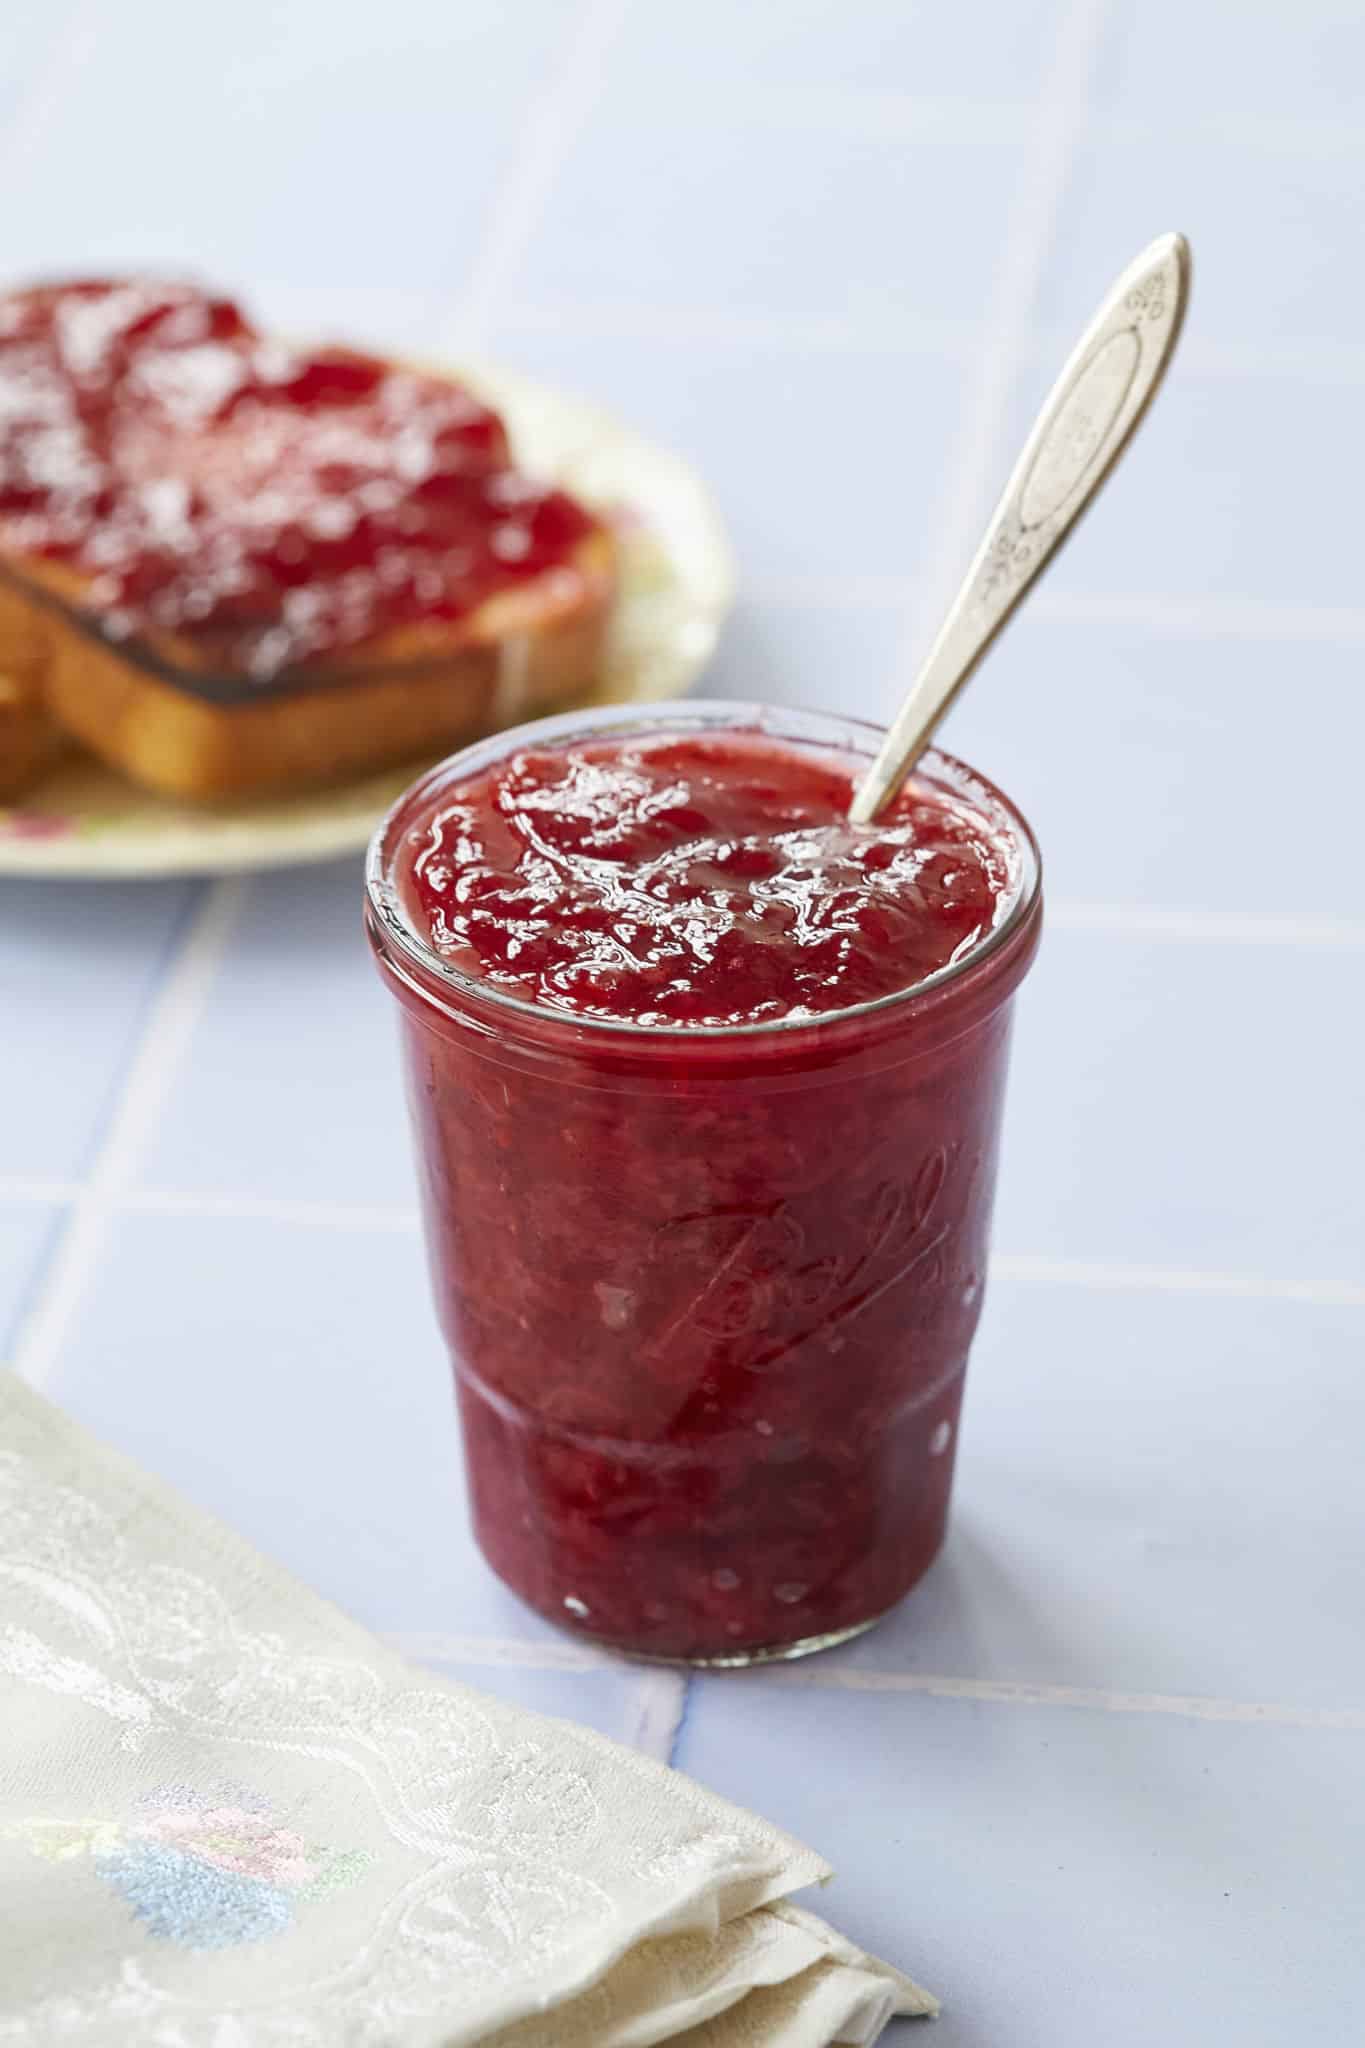 A spoon is dug into a jar of homemade jam.